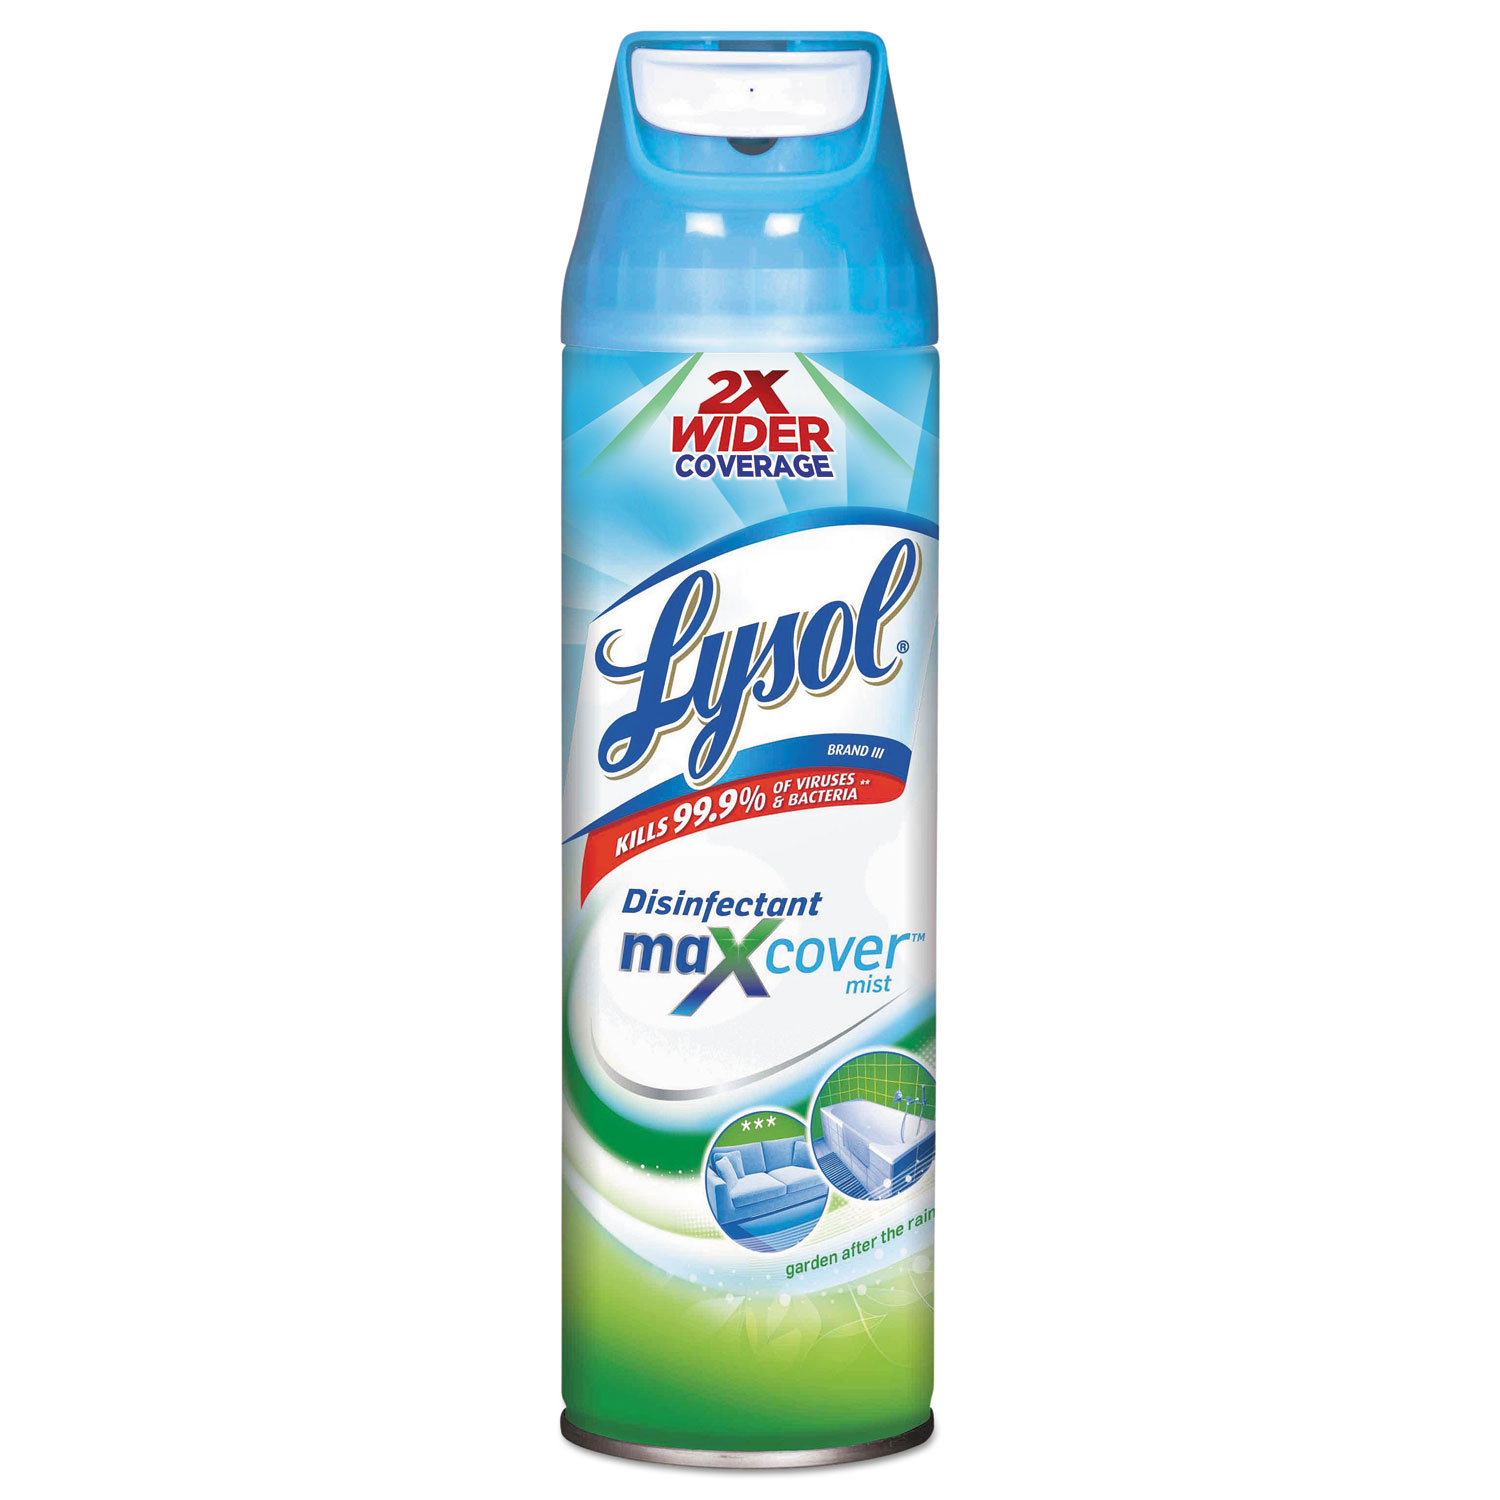  LYSOL Brand 19200-94122 Max Cover Disinfectant Mist, Garden After Rain, 15 oz Aerosol, 12/Carton (RAC94122) 